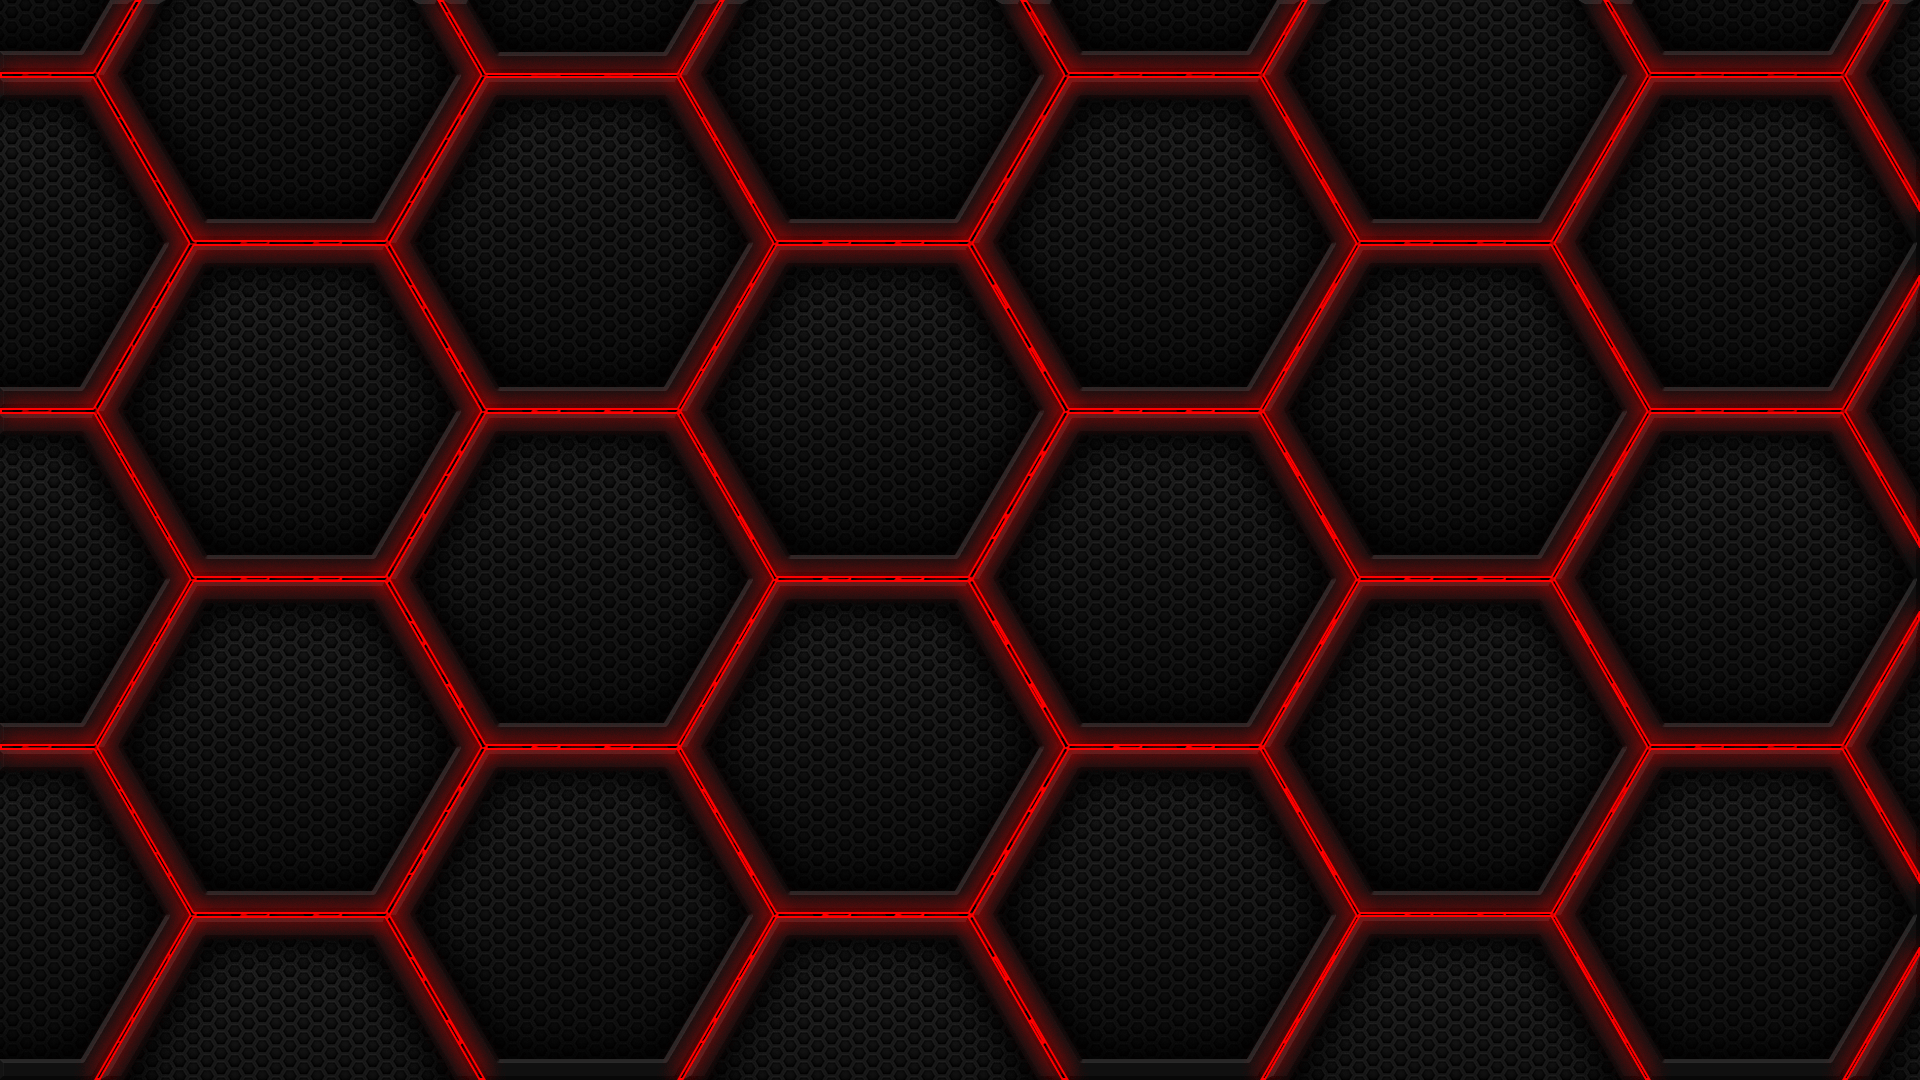 Hexagon HQ Background Wallpaper 24869